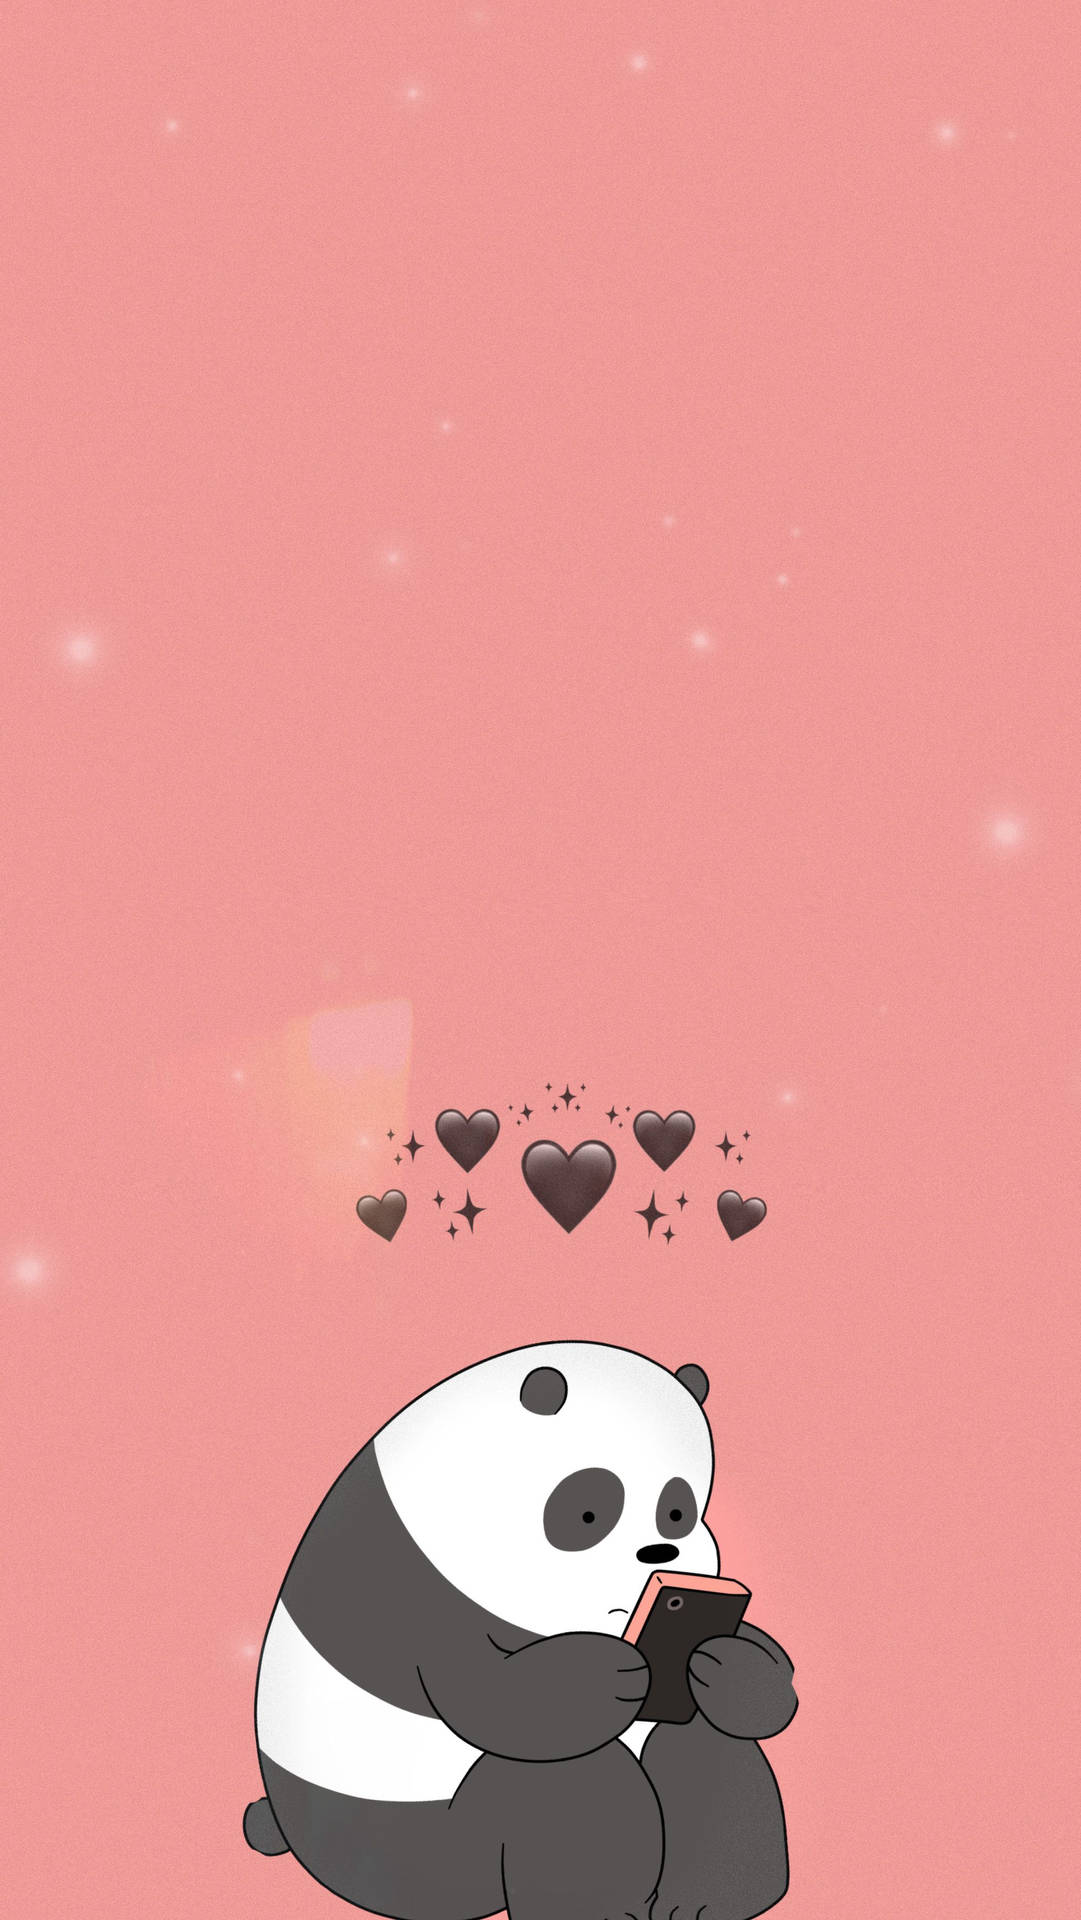 Aesthetic Panda Black Hearts Wallpaper